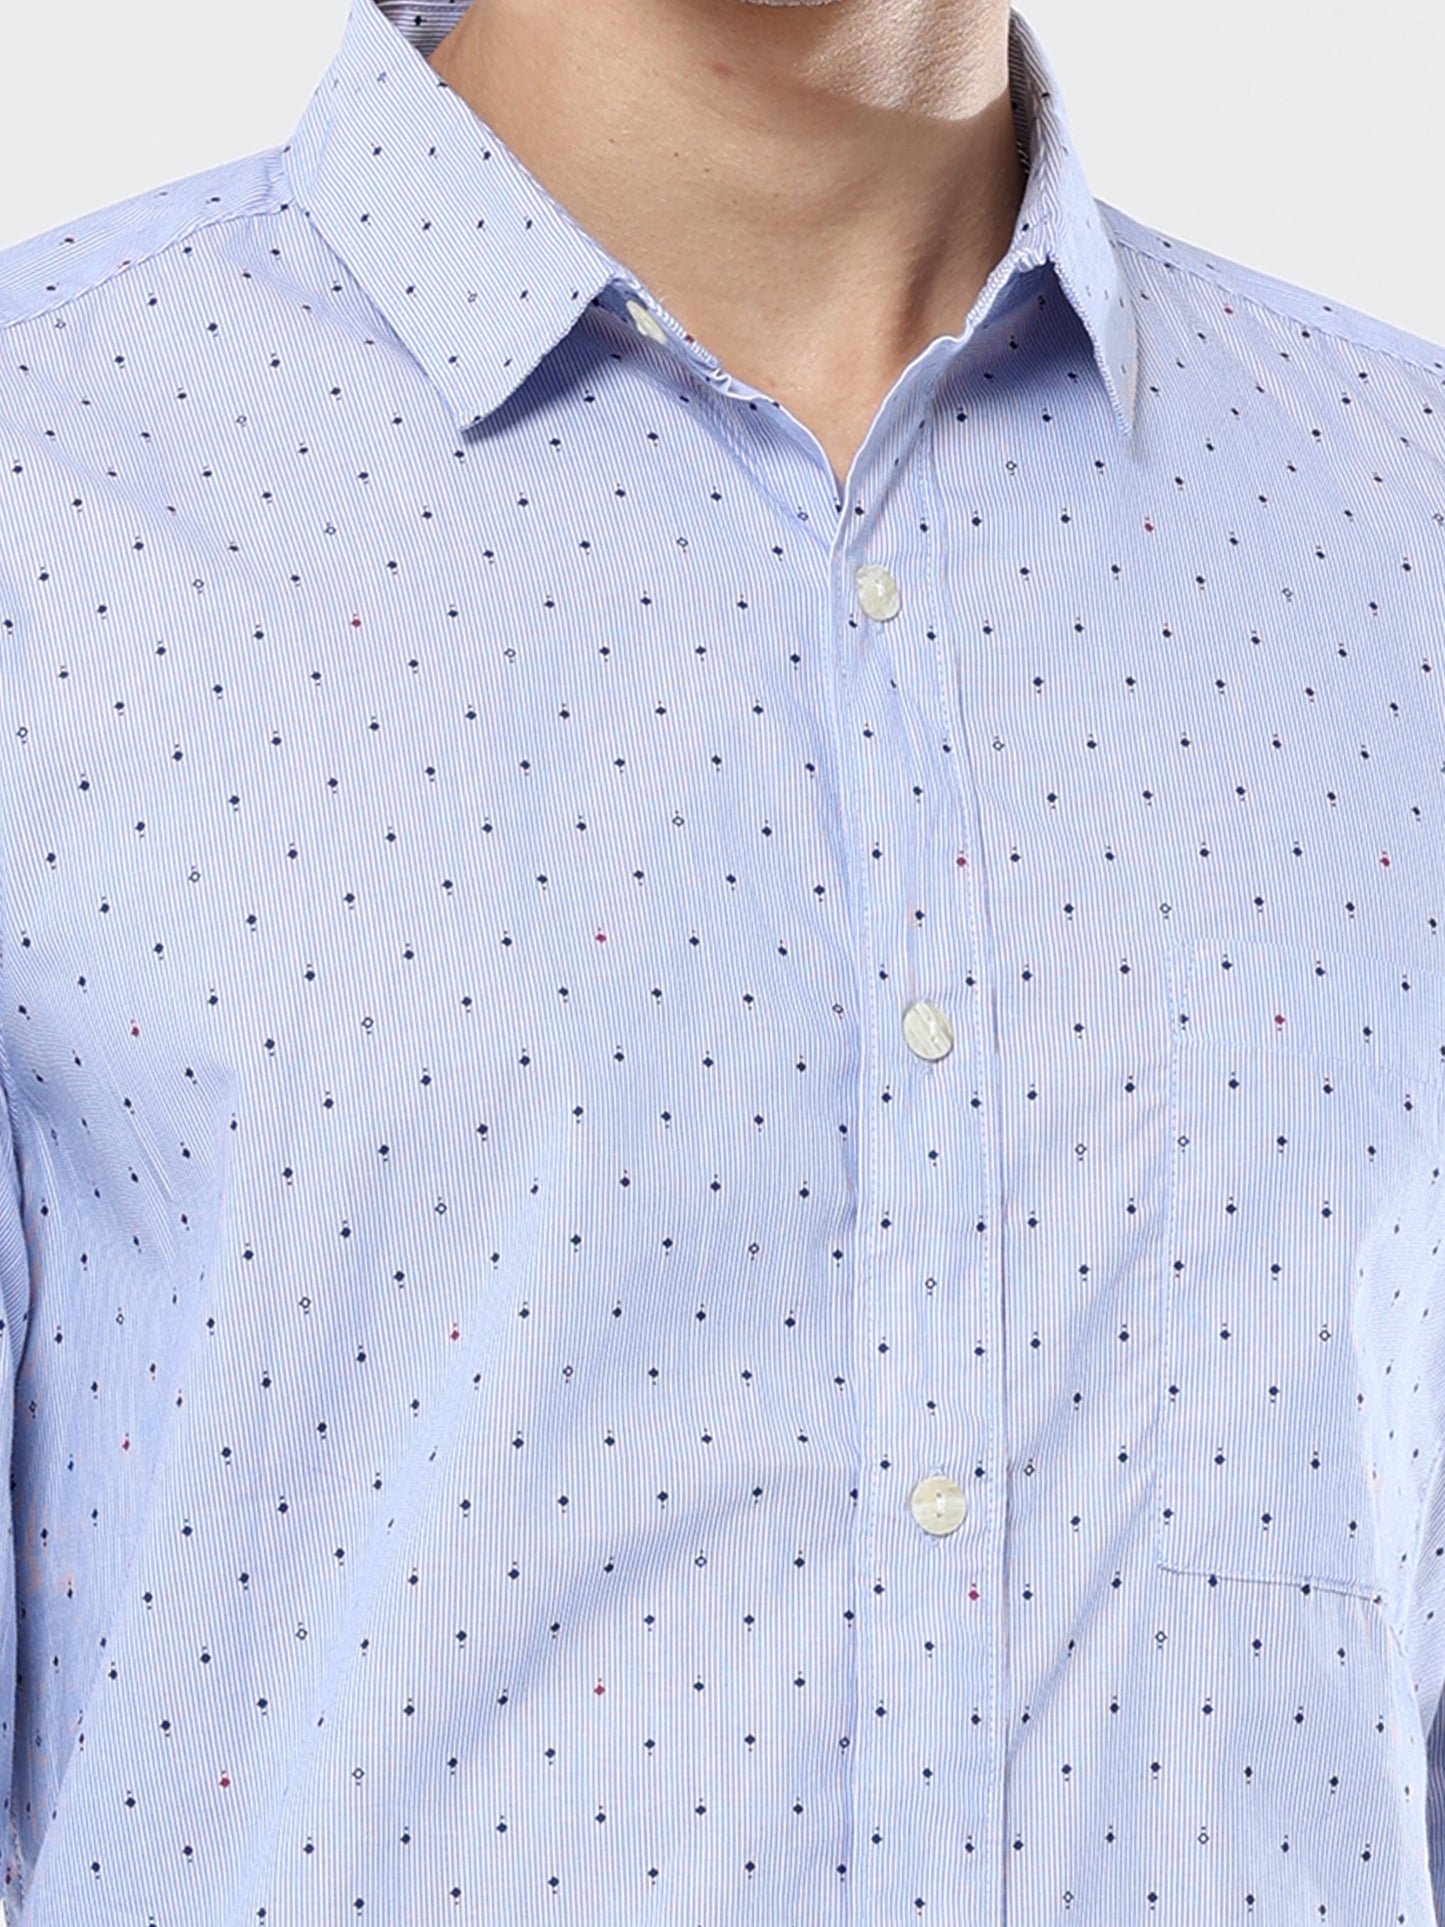 Diamond printed light blue premium cotton formal shirt for men